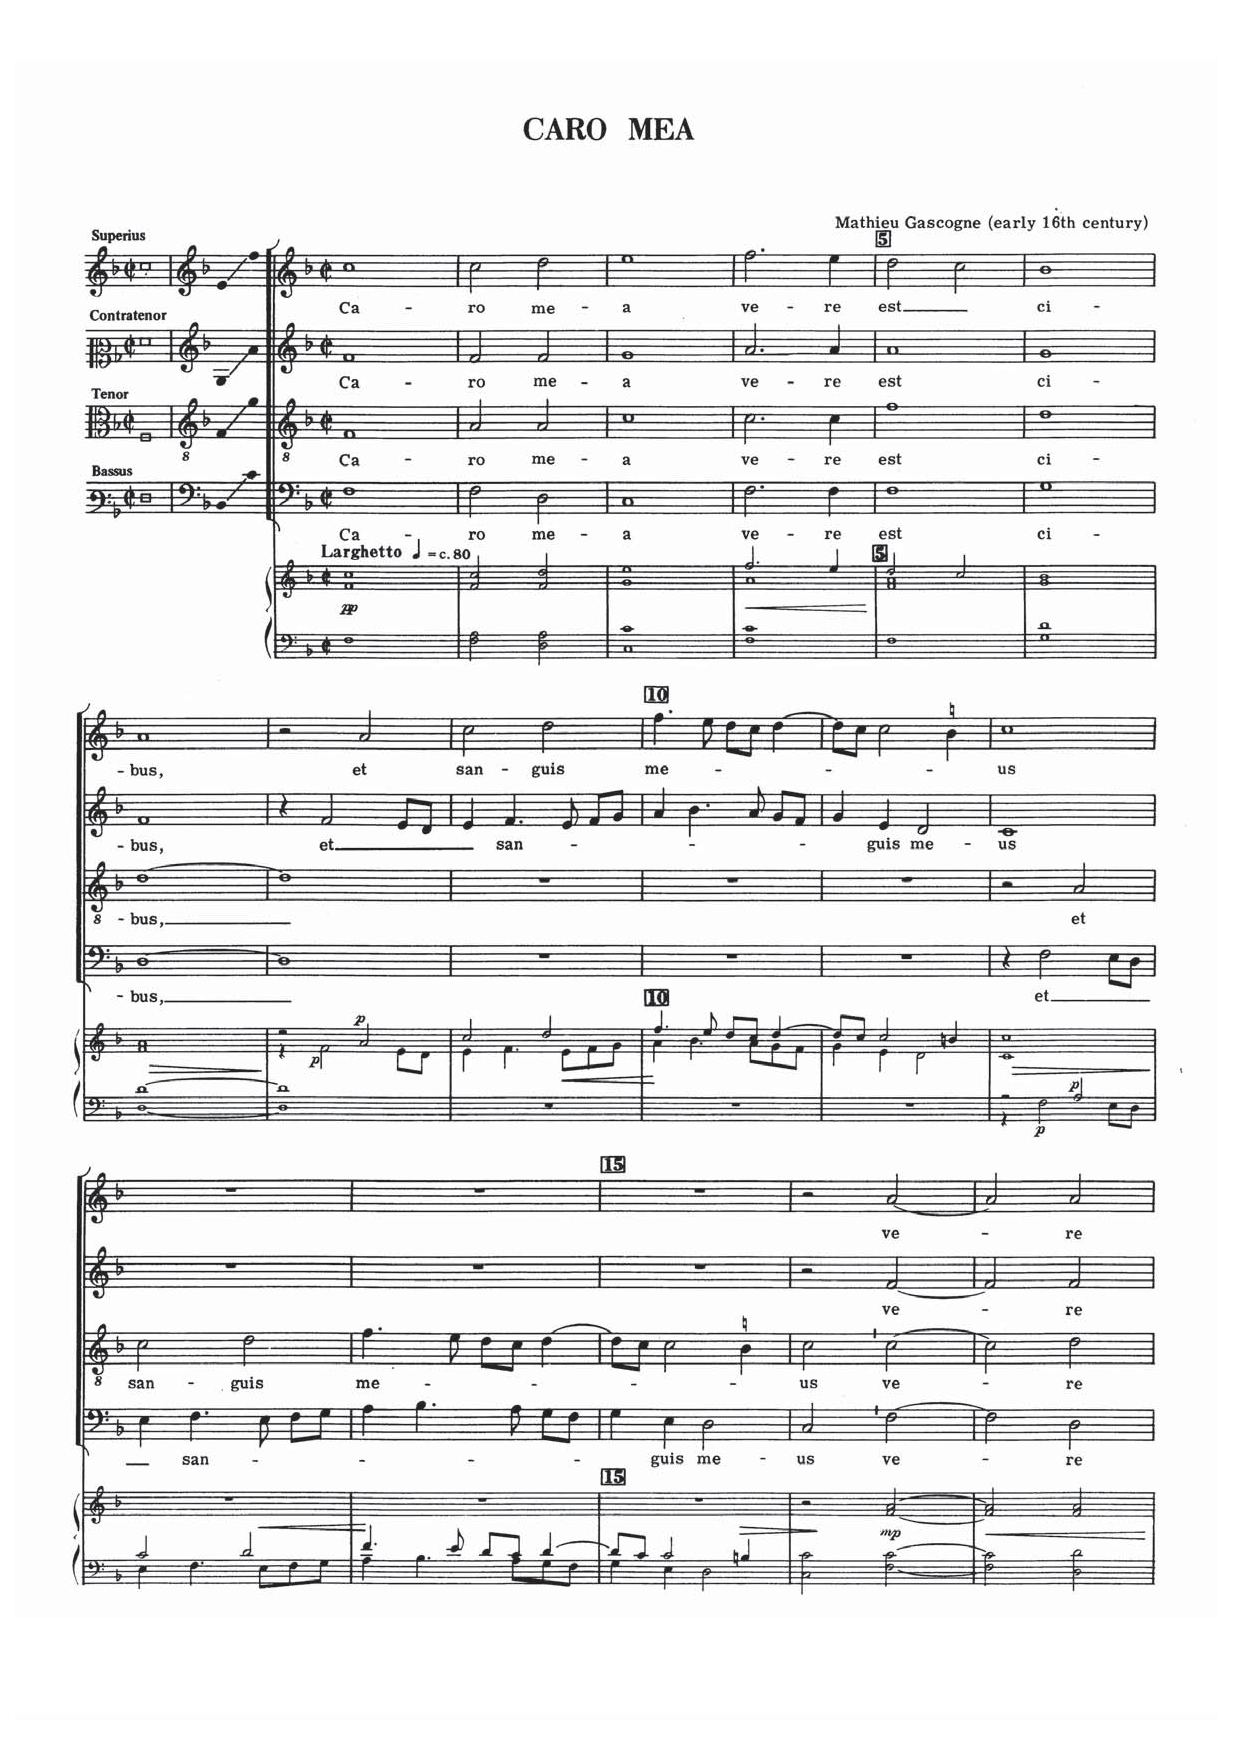 Mathieu Gascogne Caro Mea Sheet Music Notes & Chords for SATB - Download or Print PDF